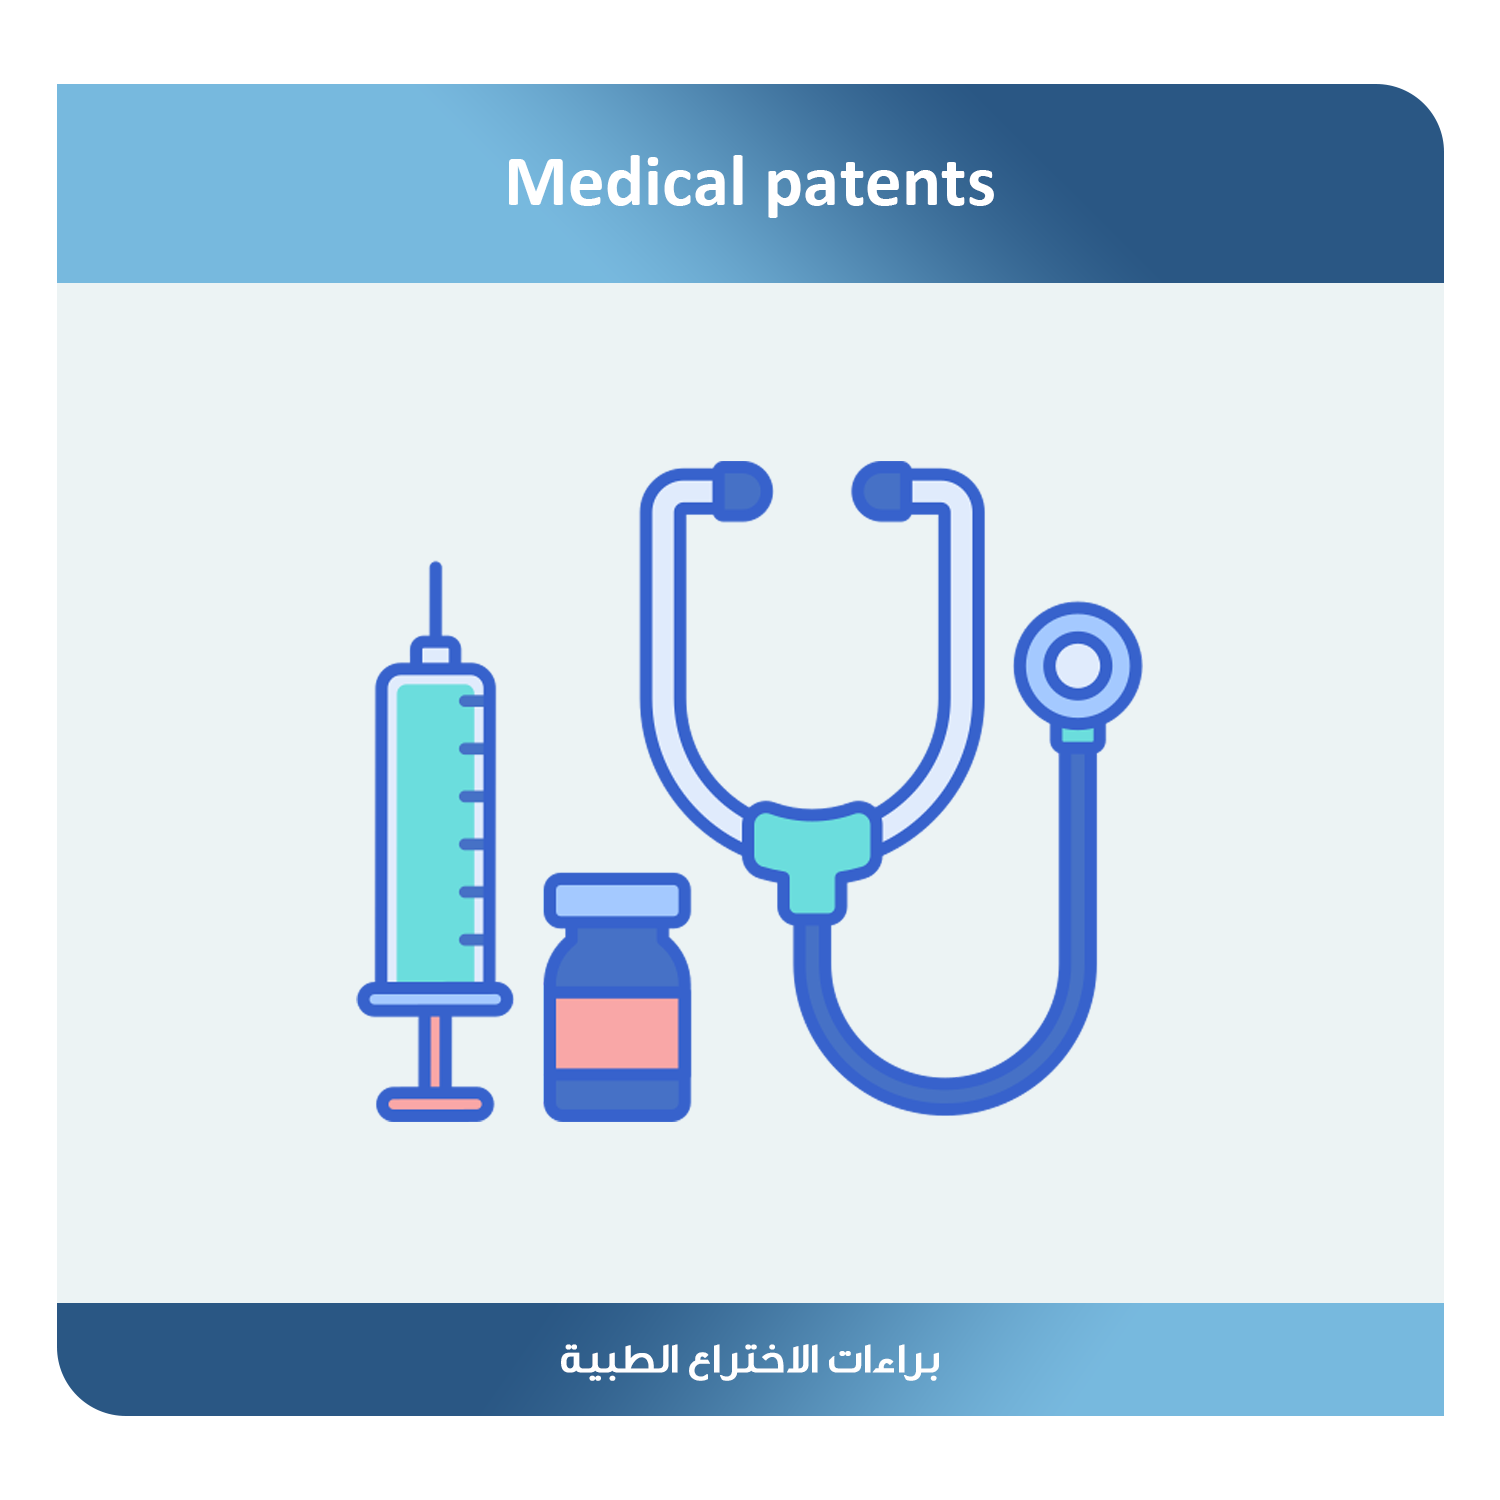 Medical patents